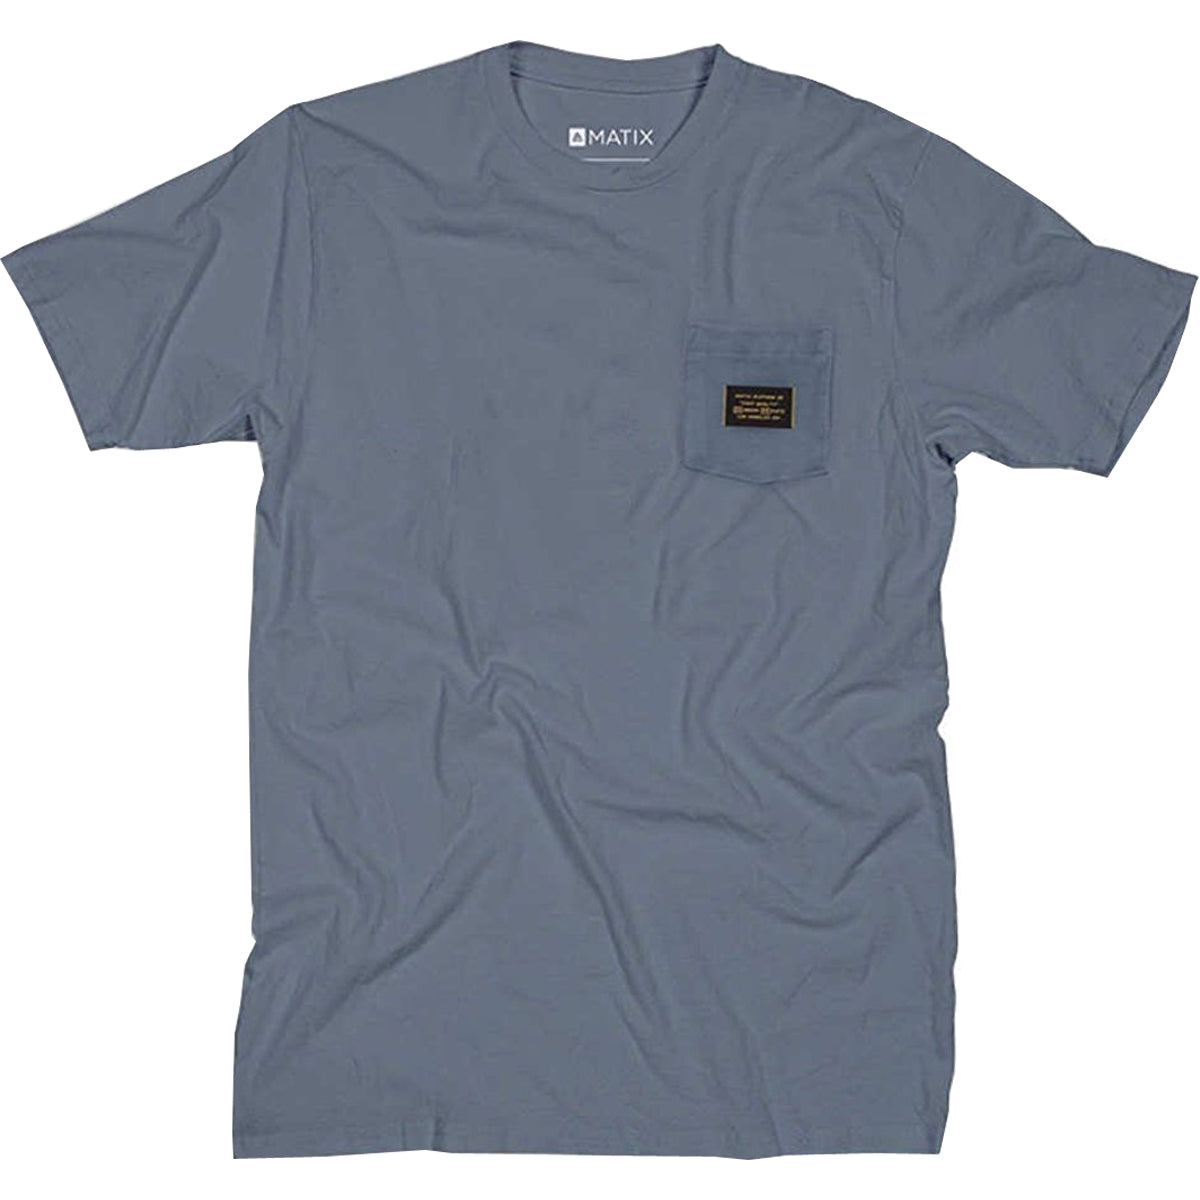 Matix First Quality Pocket Men's Short-Sleeve Shirts Brand New - A4PTS097